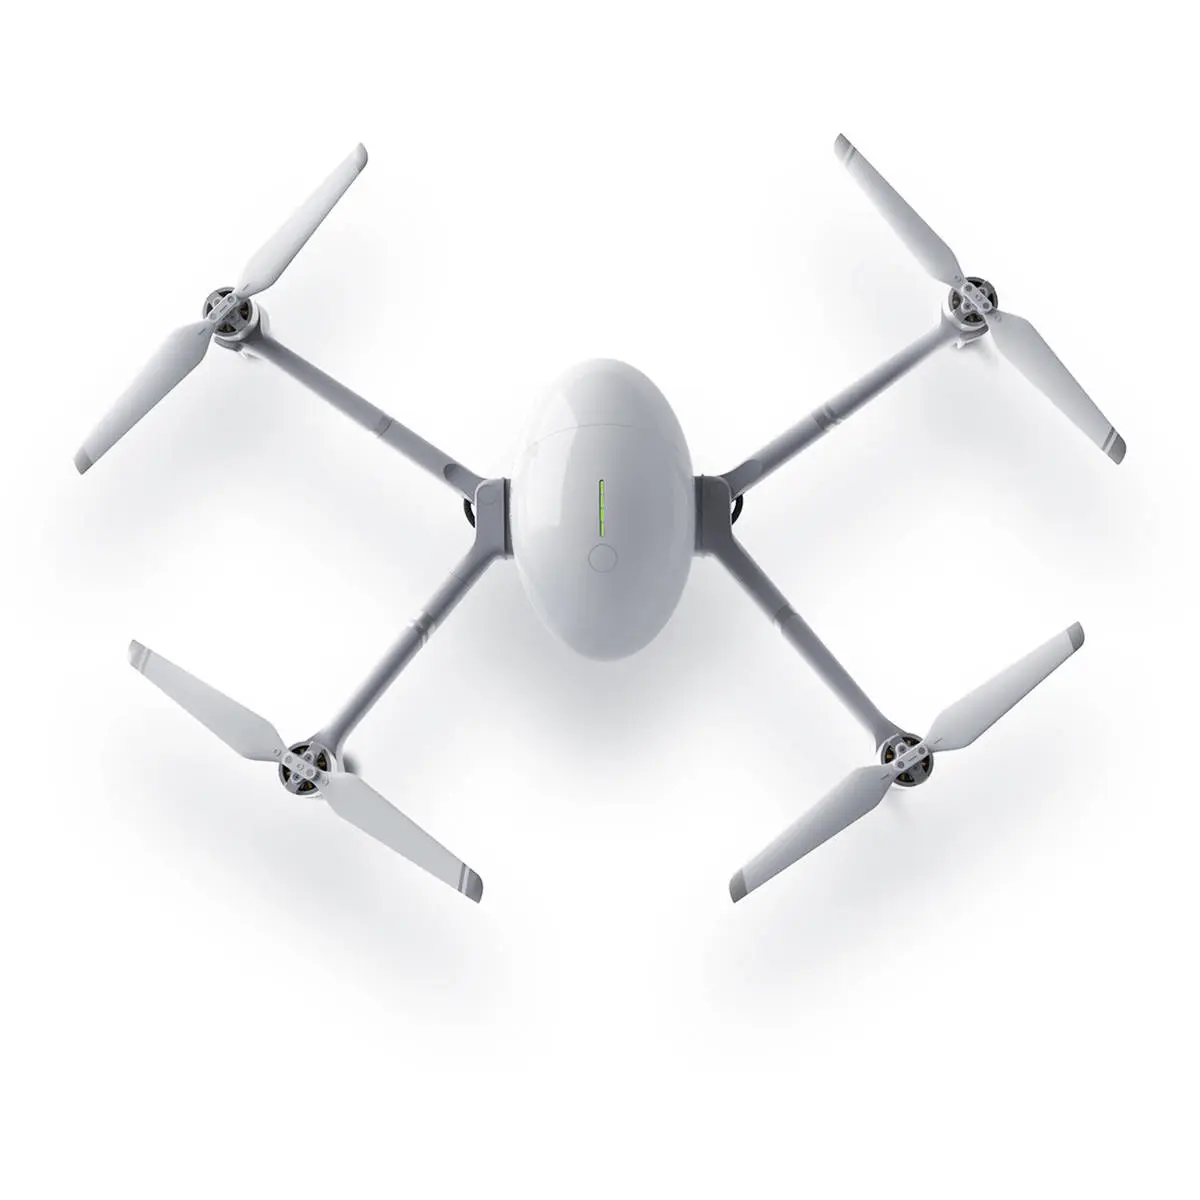 3. Powervision PowerEgg X Drone